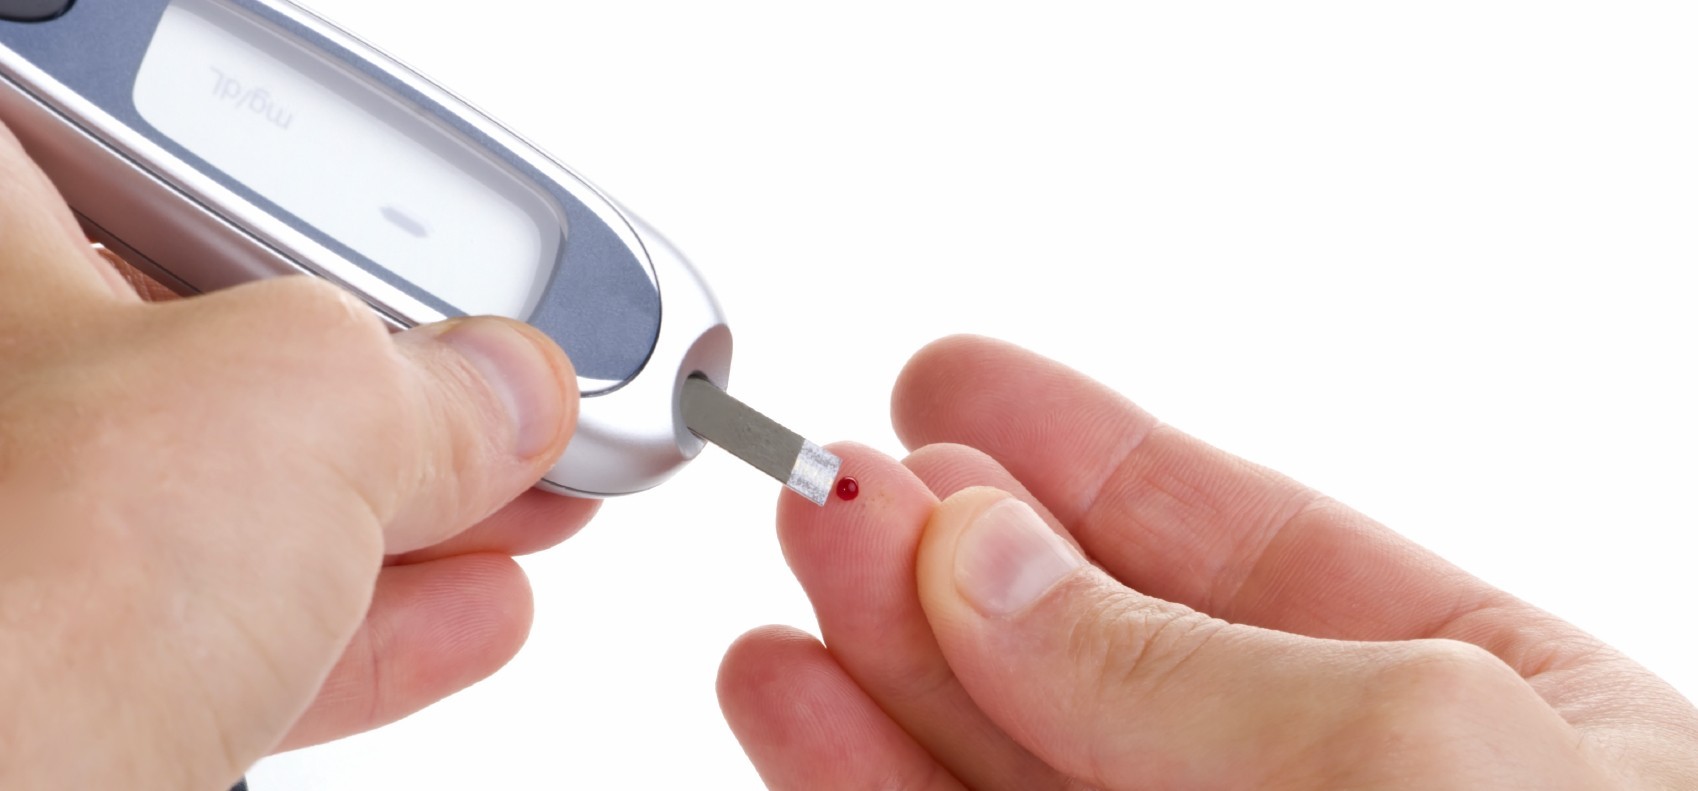 Cirurgia metabólica é eficiente no combate ao diabetes tipo 2, mesmo antes da perda de peso do paciente